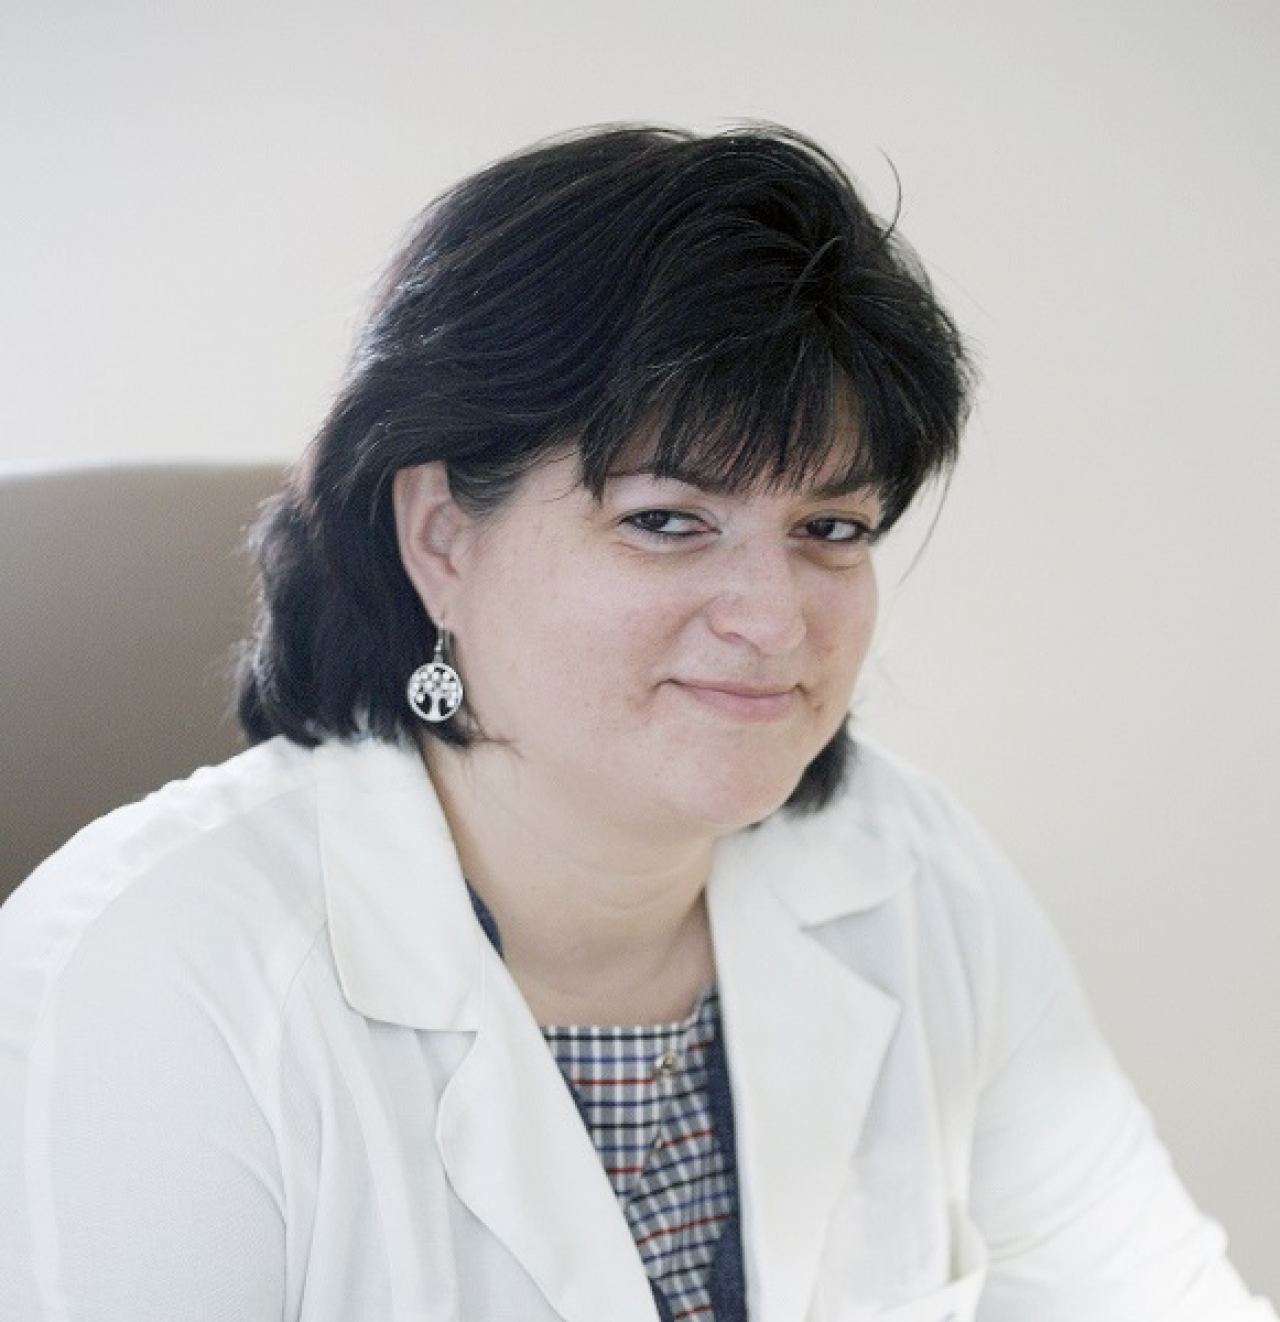 Dr. Nemesi Krisztina